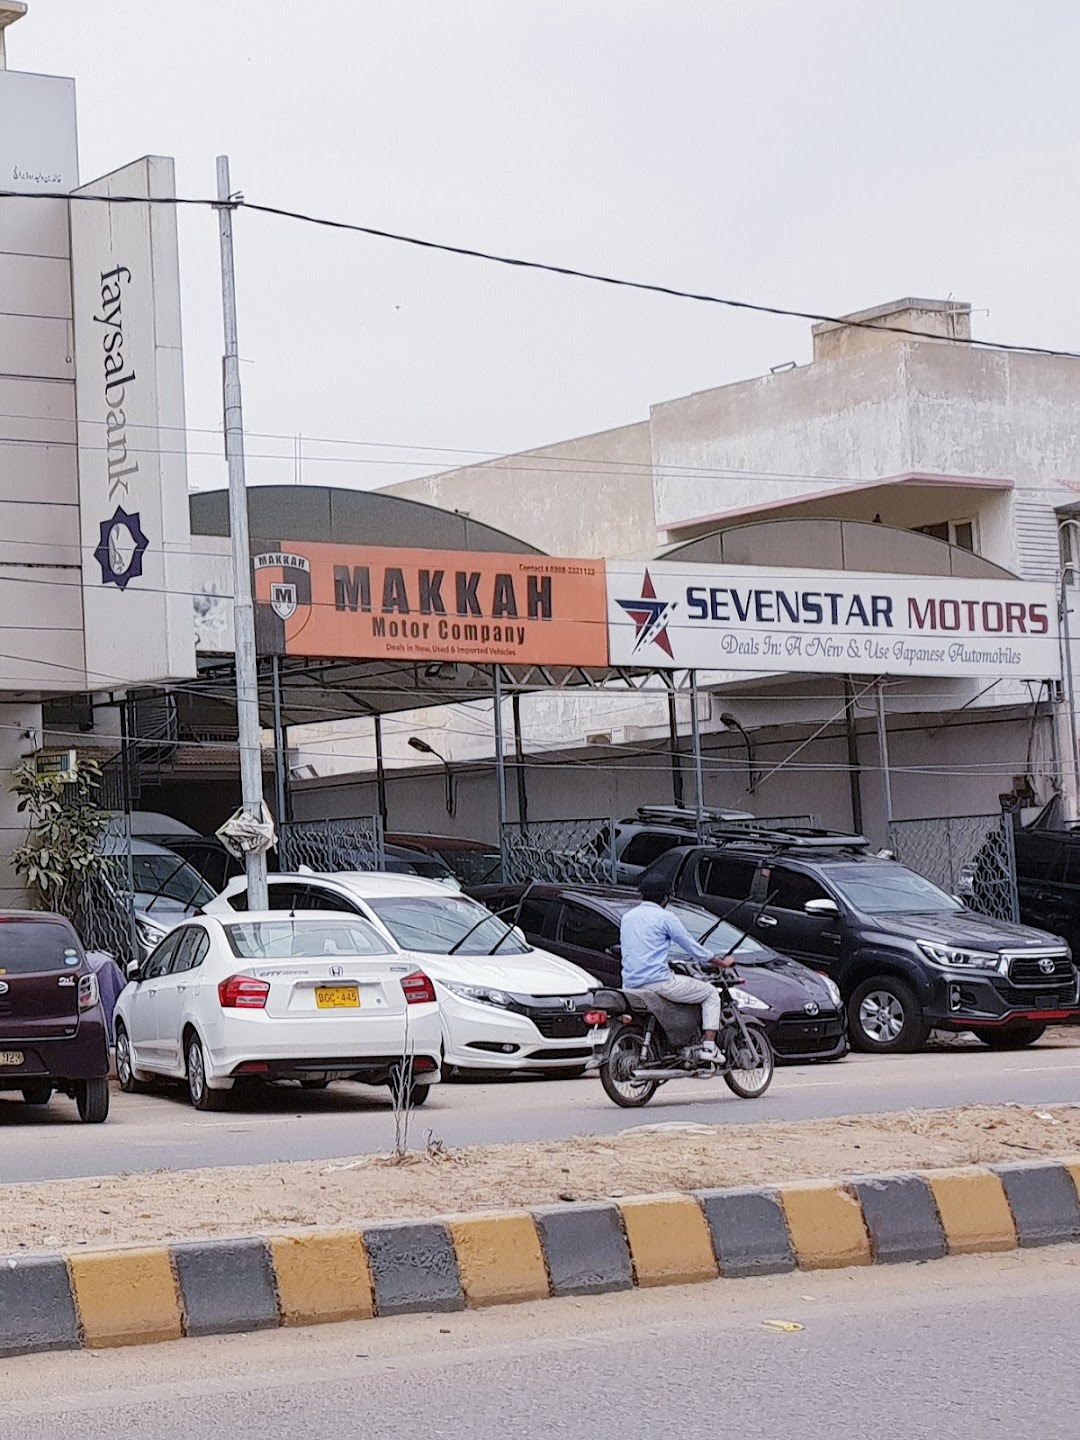 Makkah Motor Company